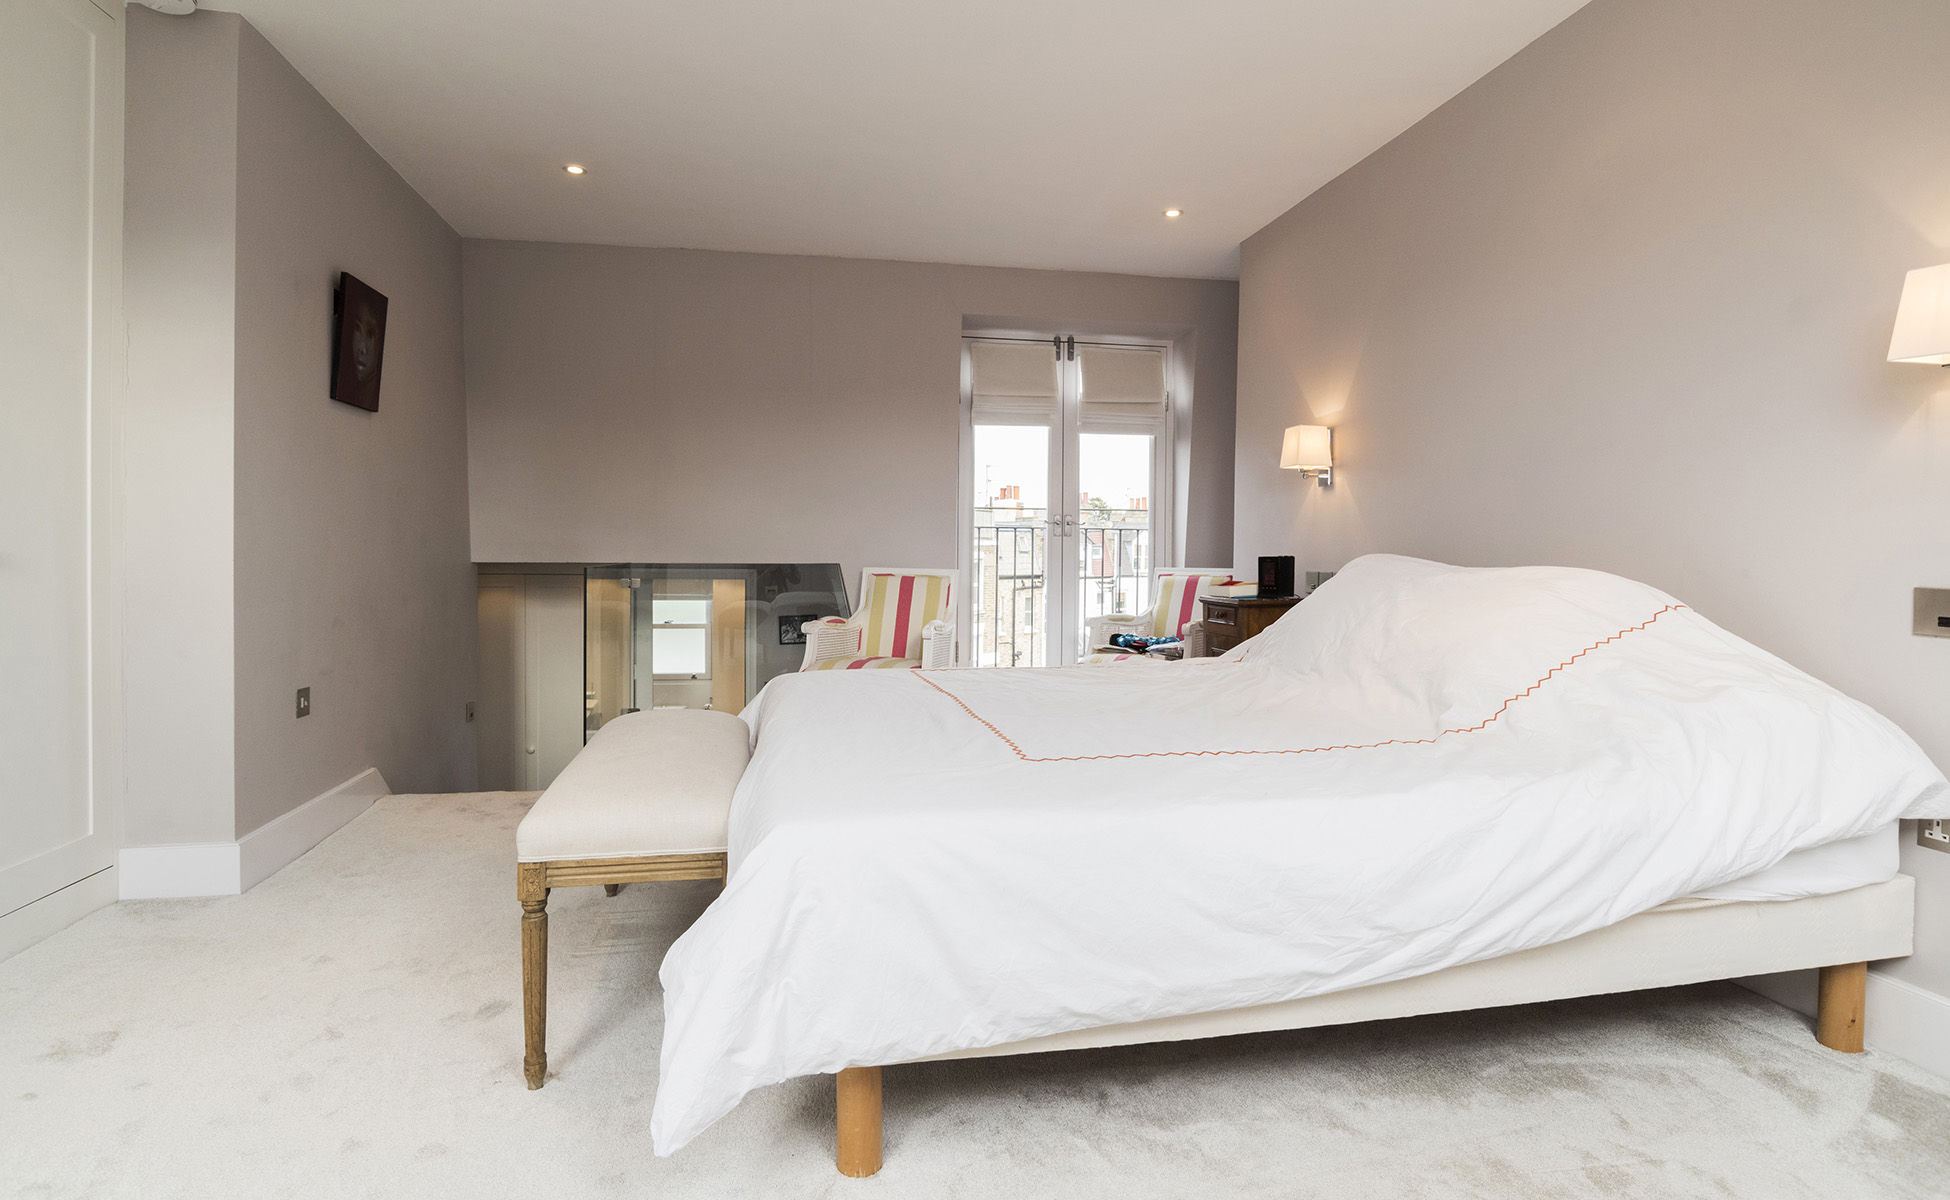 Lovelydays luxury service apartment rental - London - Fulham - Gironde road - Lovelysuite - 4 bedrooms - 2 bathrooms - Queen bed - dfa00b4b671b - Lovelydays